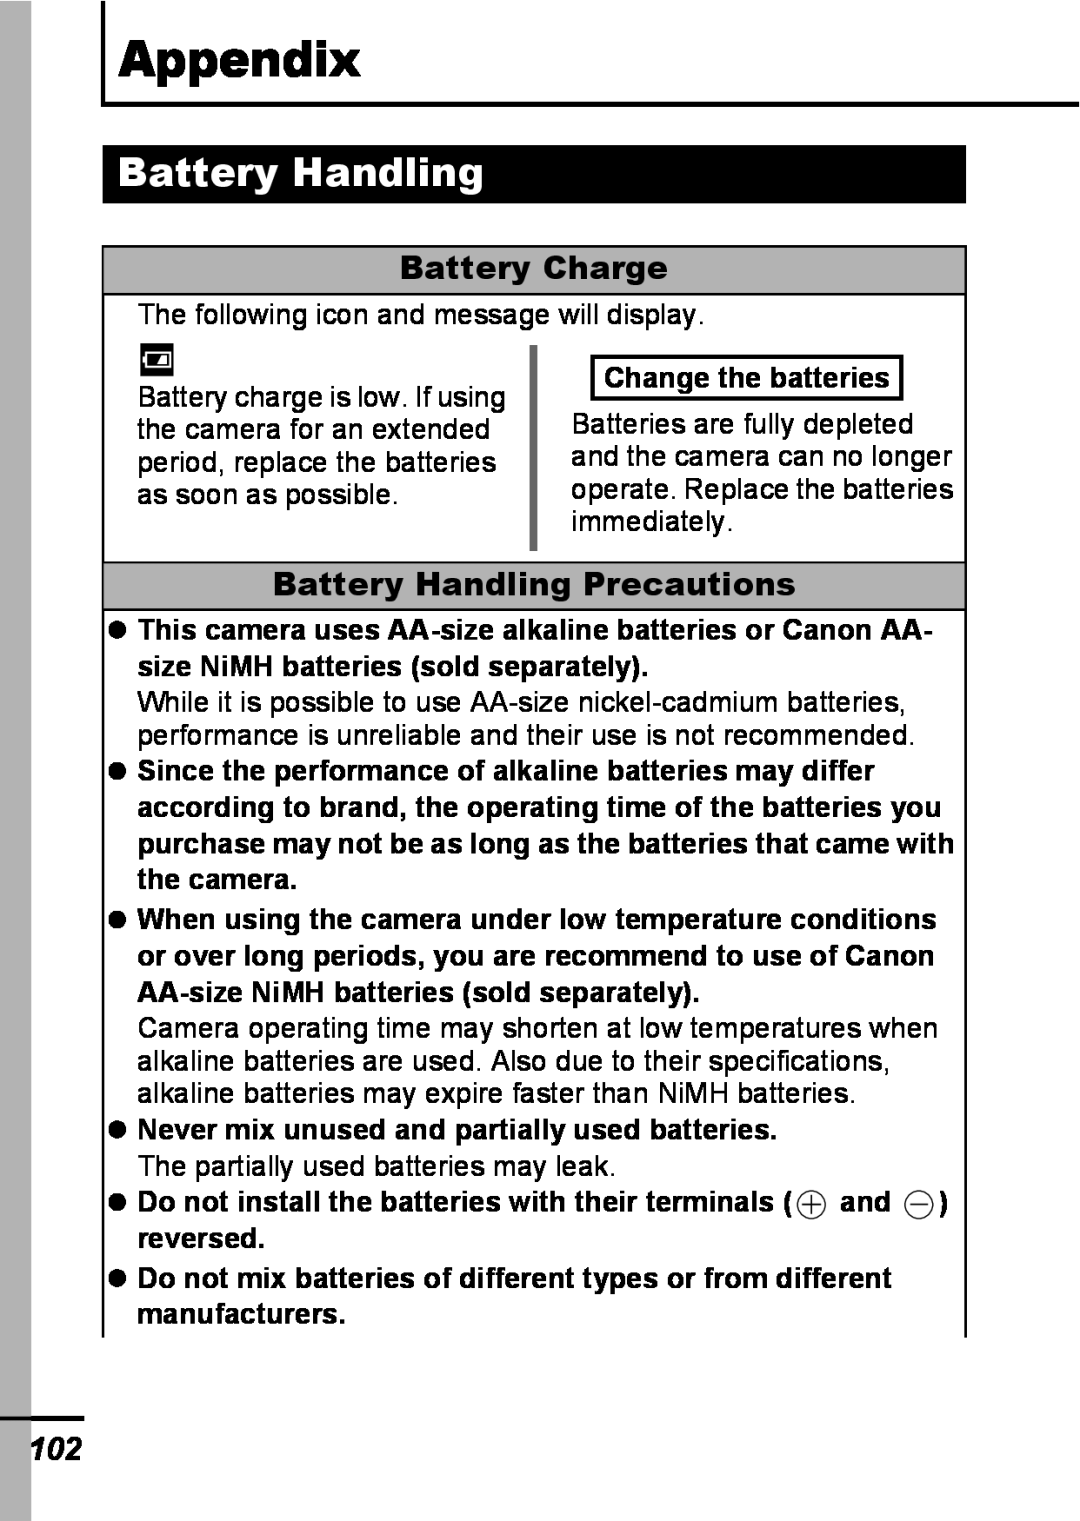 Canon A540 appendix Appendix, Battery Charge, Battery Handling Precautions, Change the batteries 